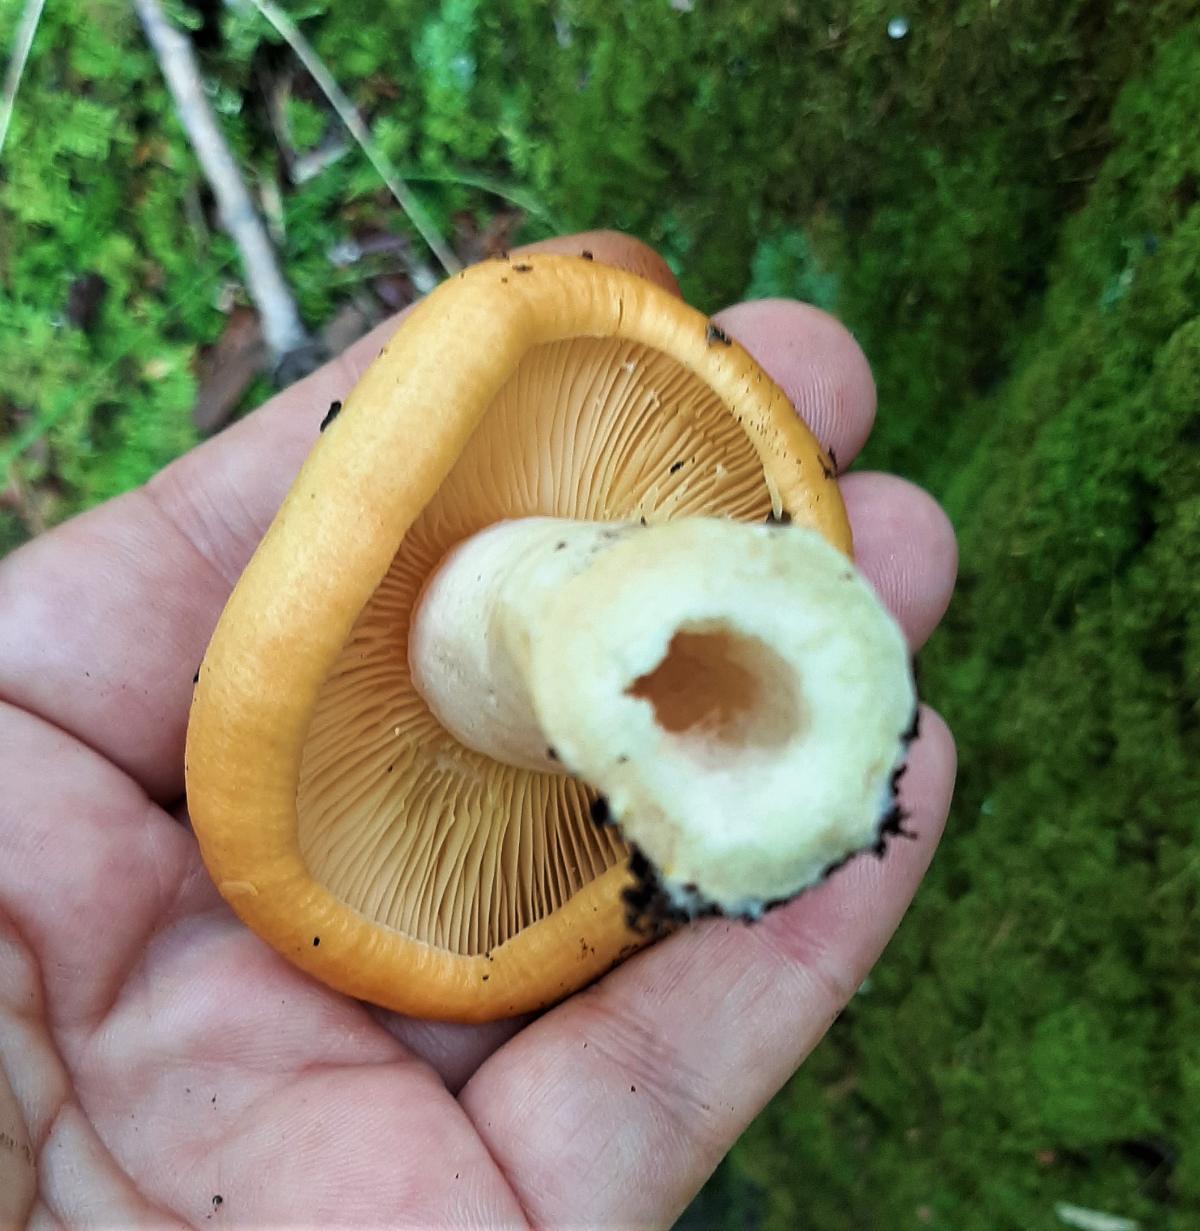 Mushroom with hollow stem